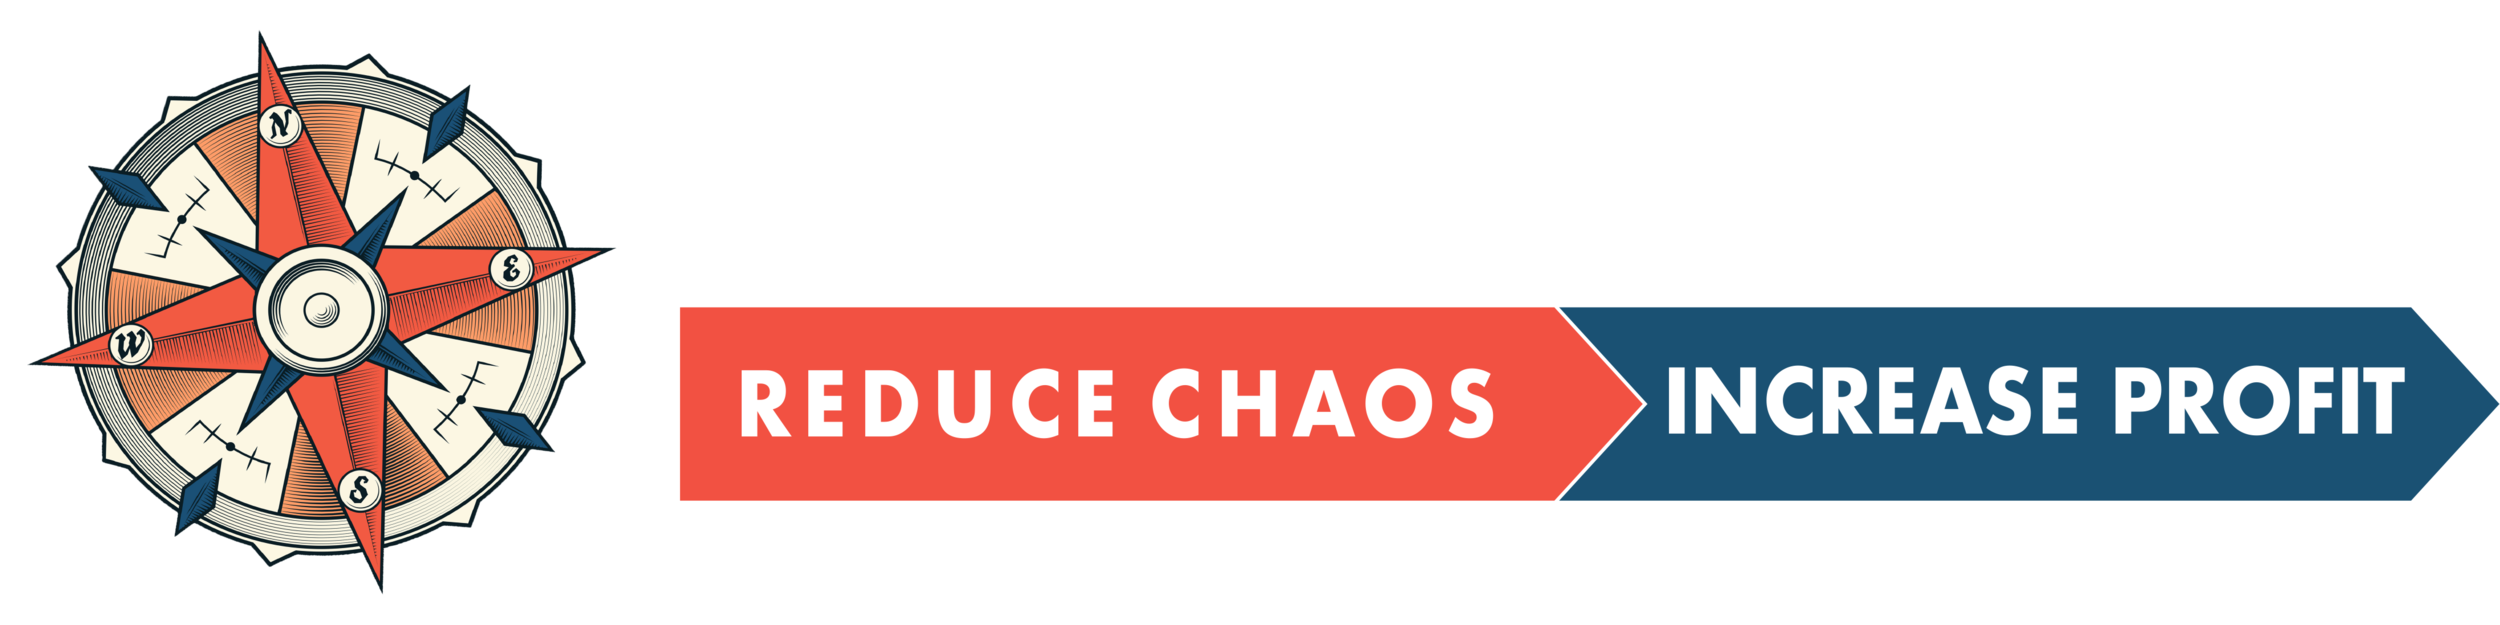 We Reduce Chaos, LLC